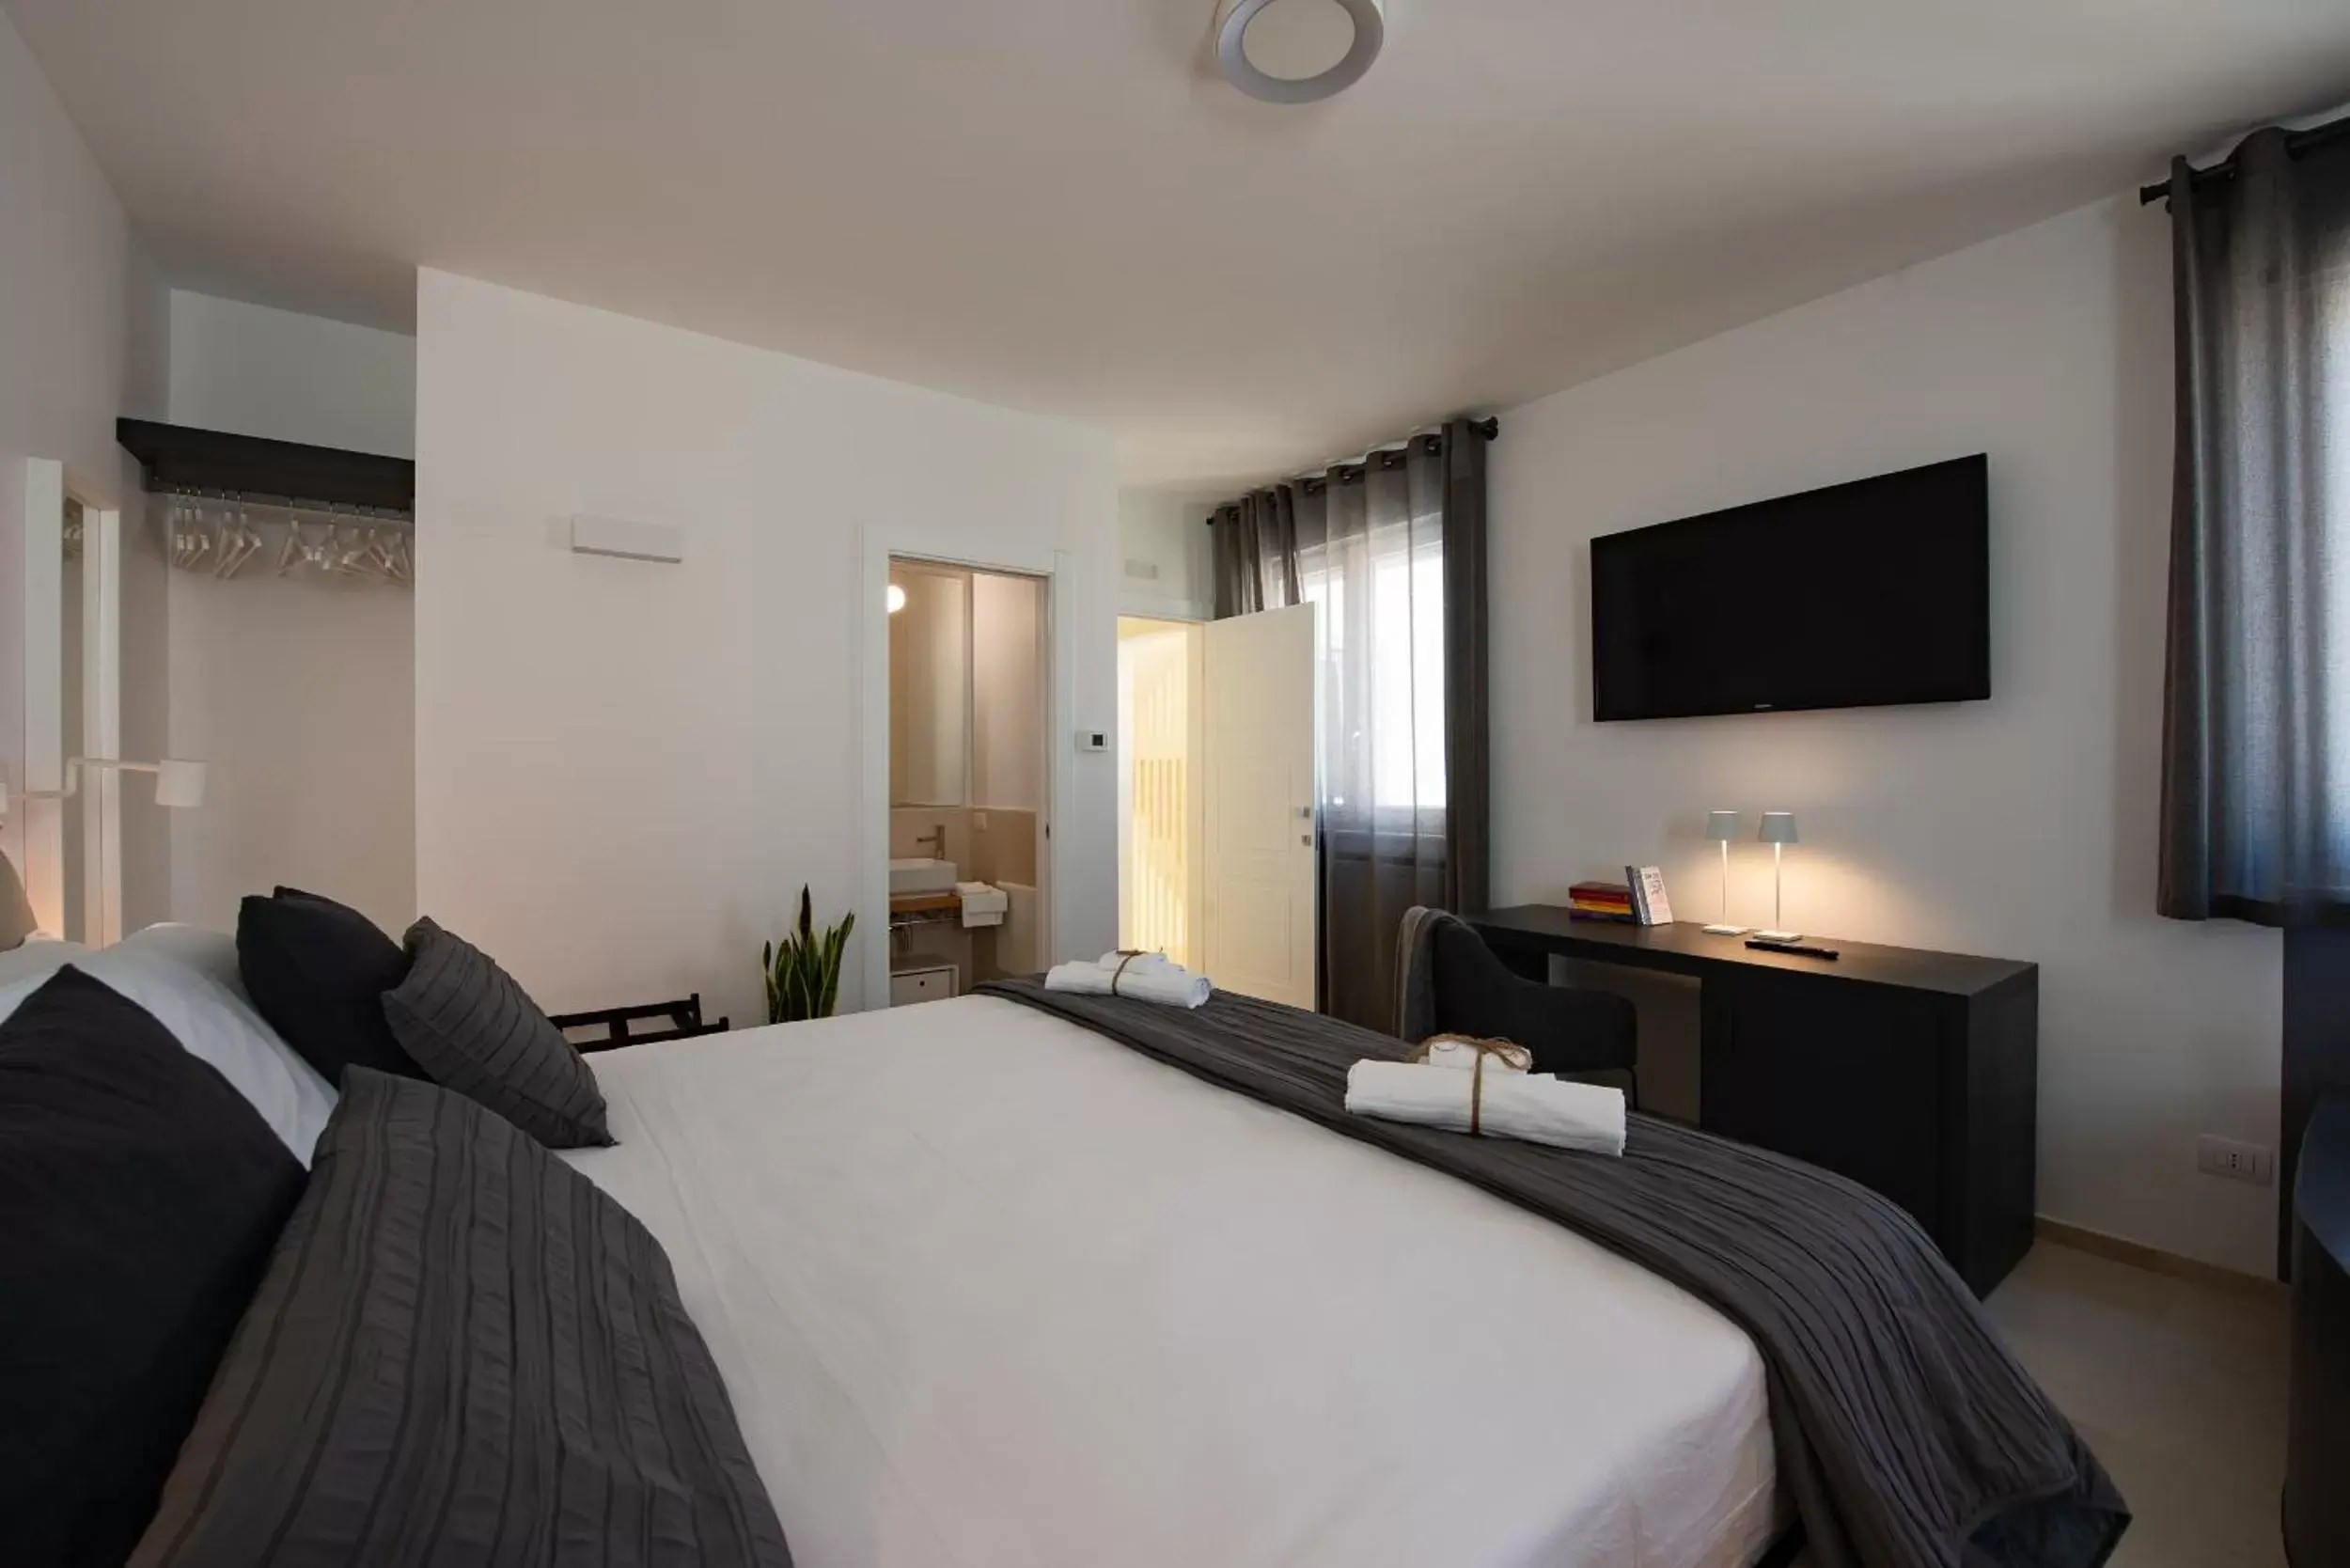 Bed in Suite1212 - Rattazzi